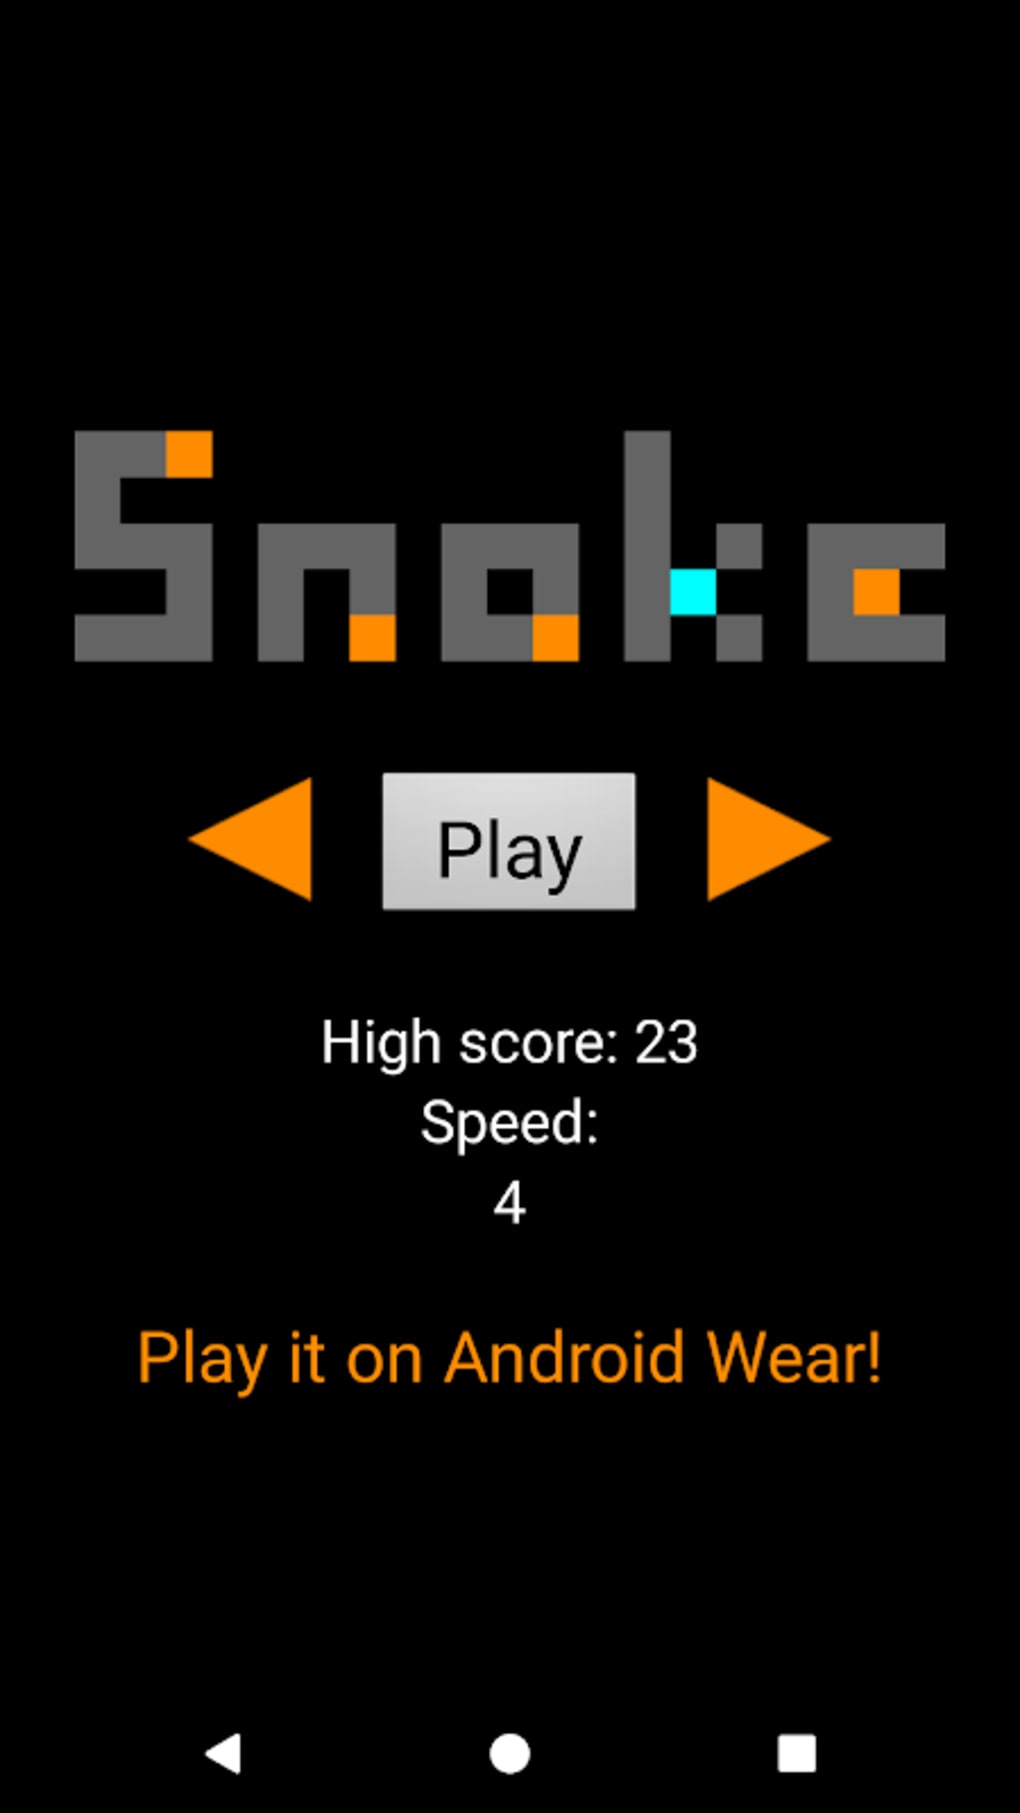 Download do APK de Snake Game Classic para Android